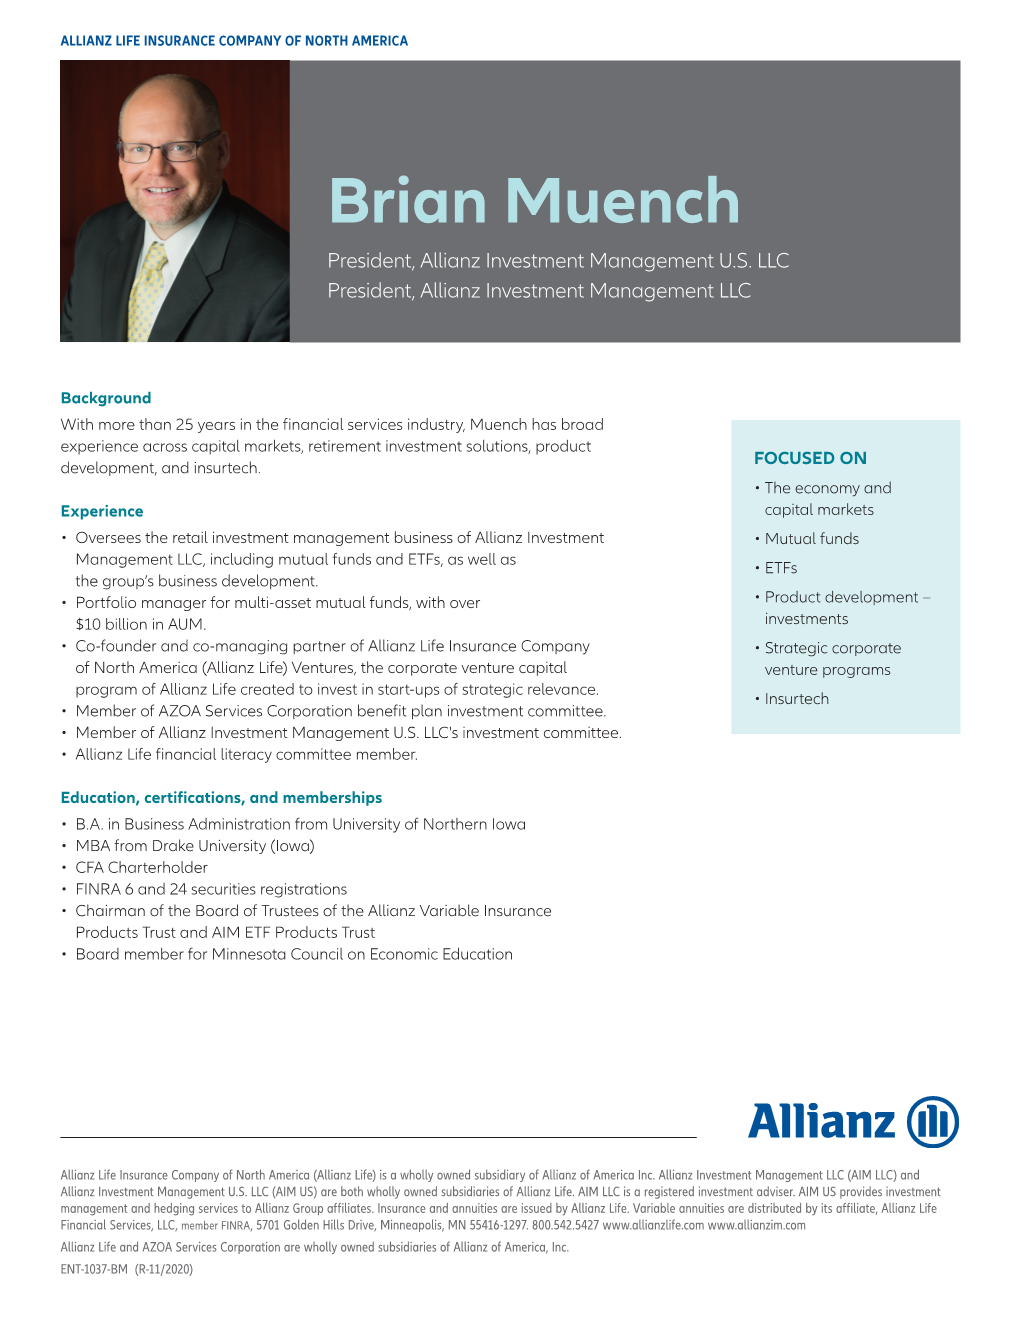 Brian Muench President, Allianz Investment Management U.S